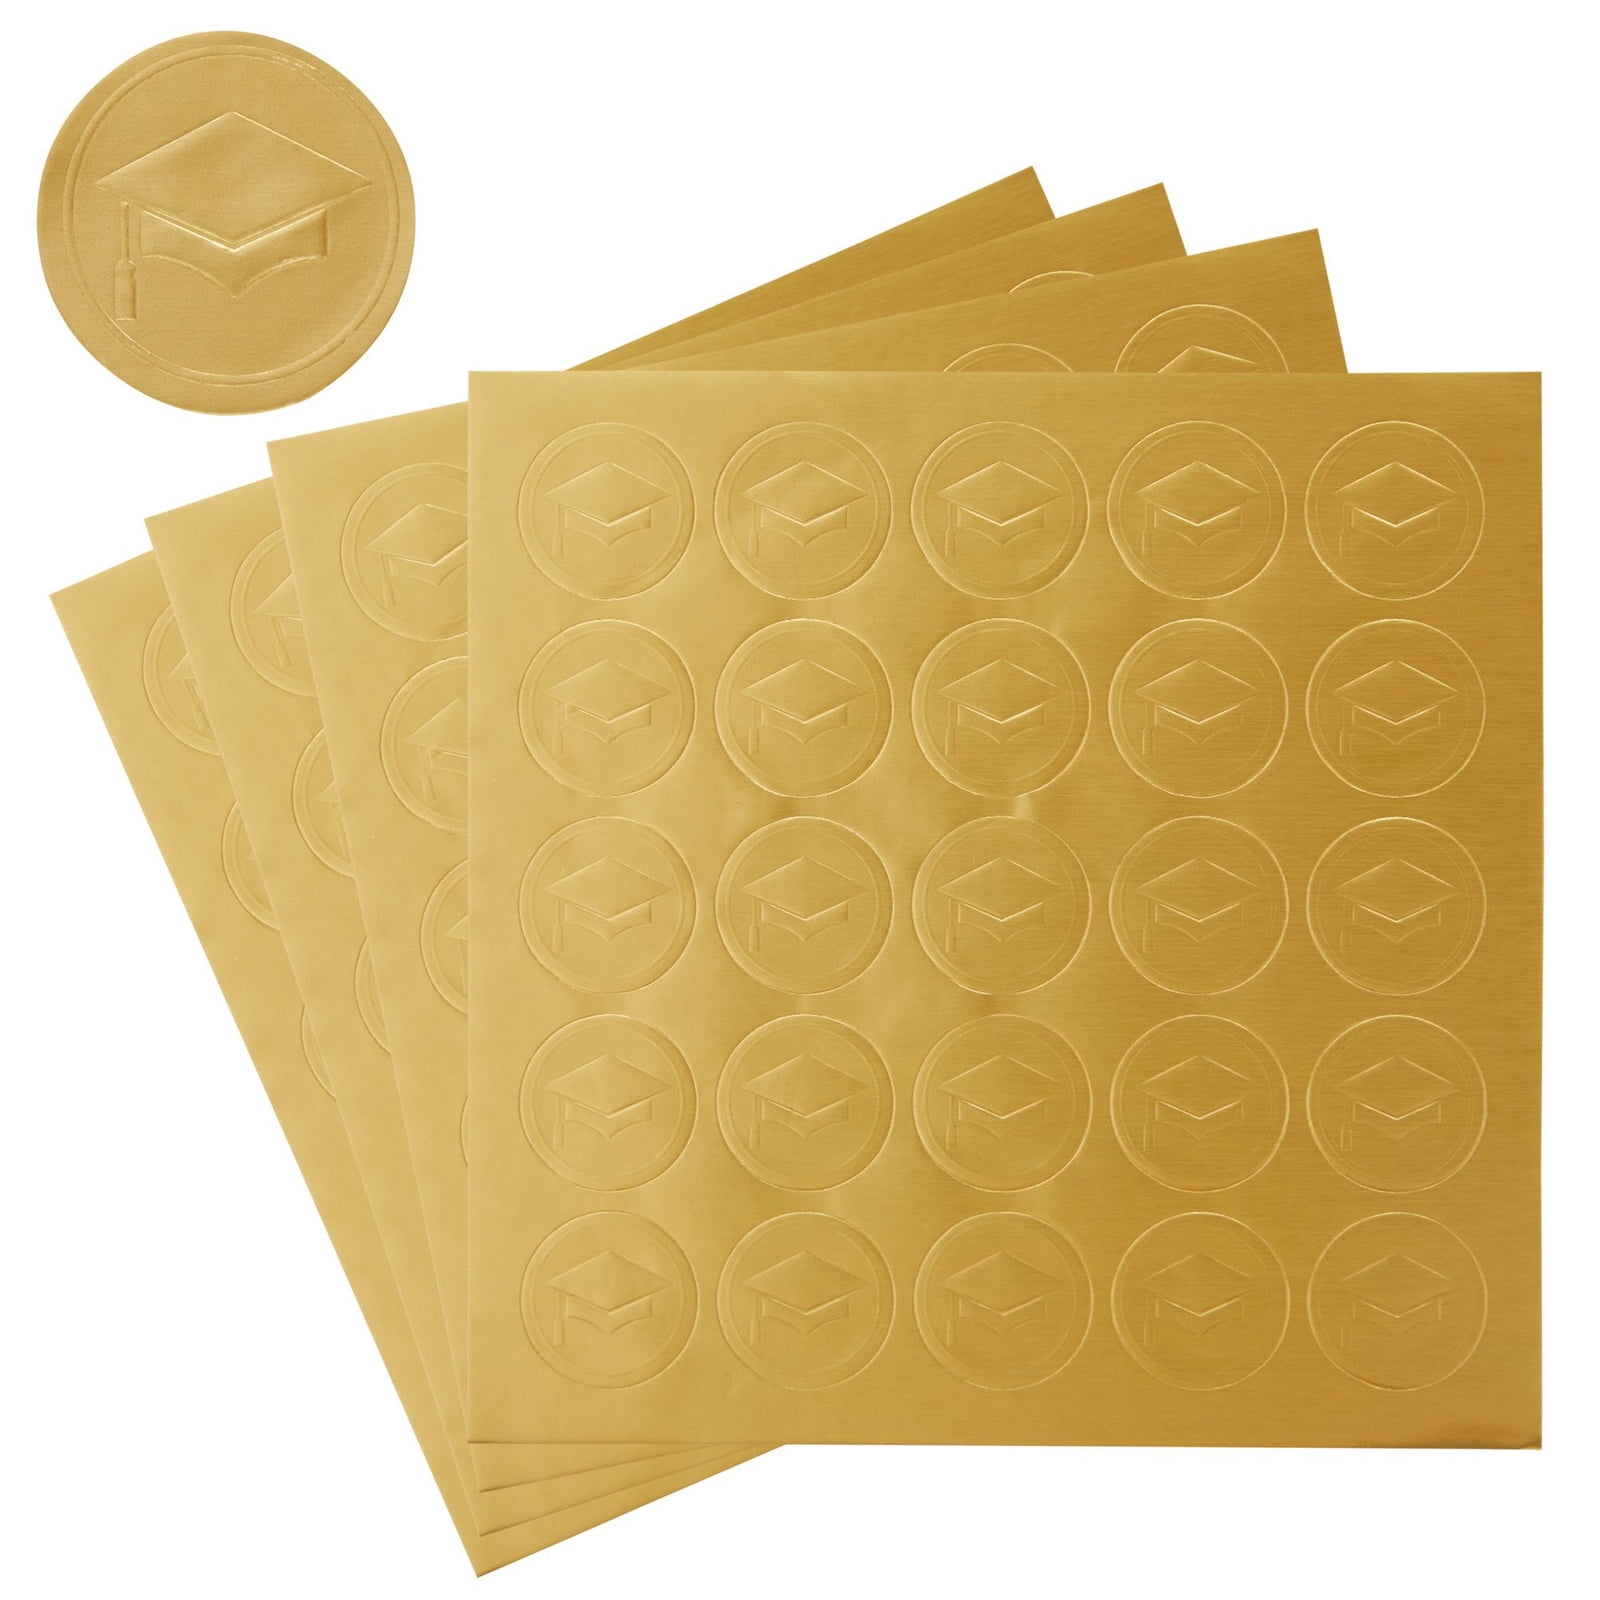 Labels 1" by 1.5" 50 Disney Babies Envelope Seals Stickers 